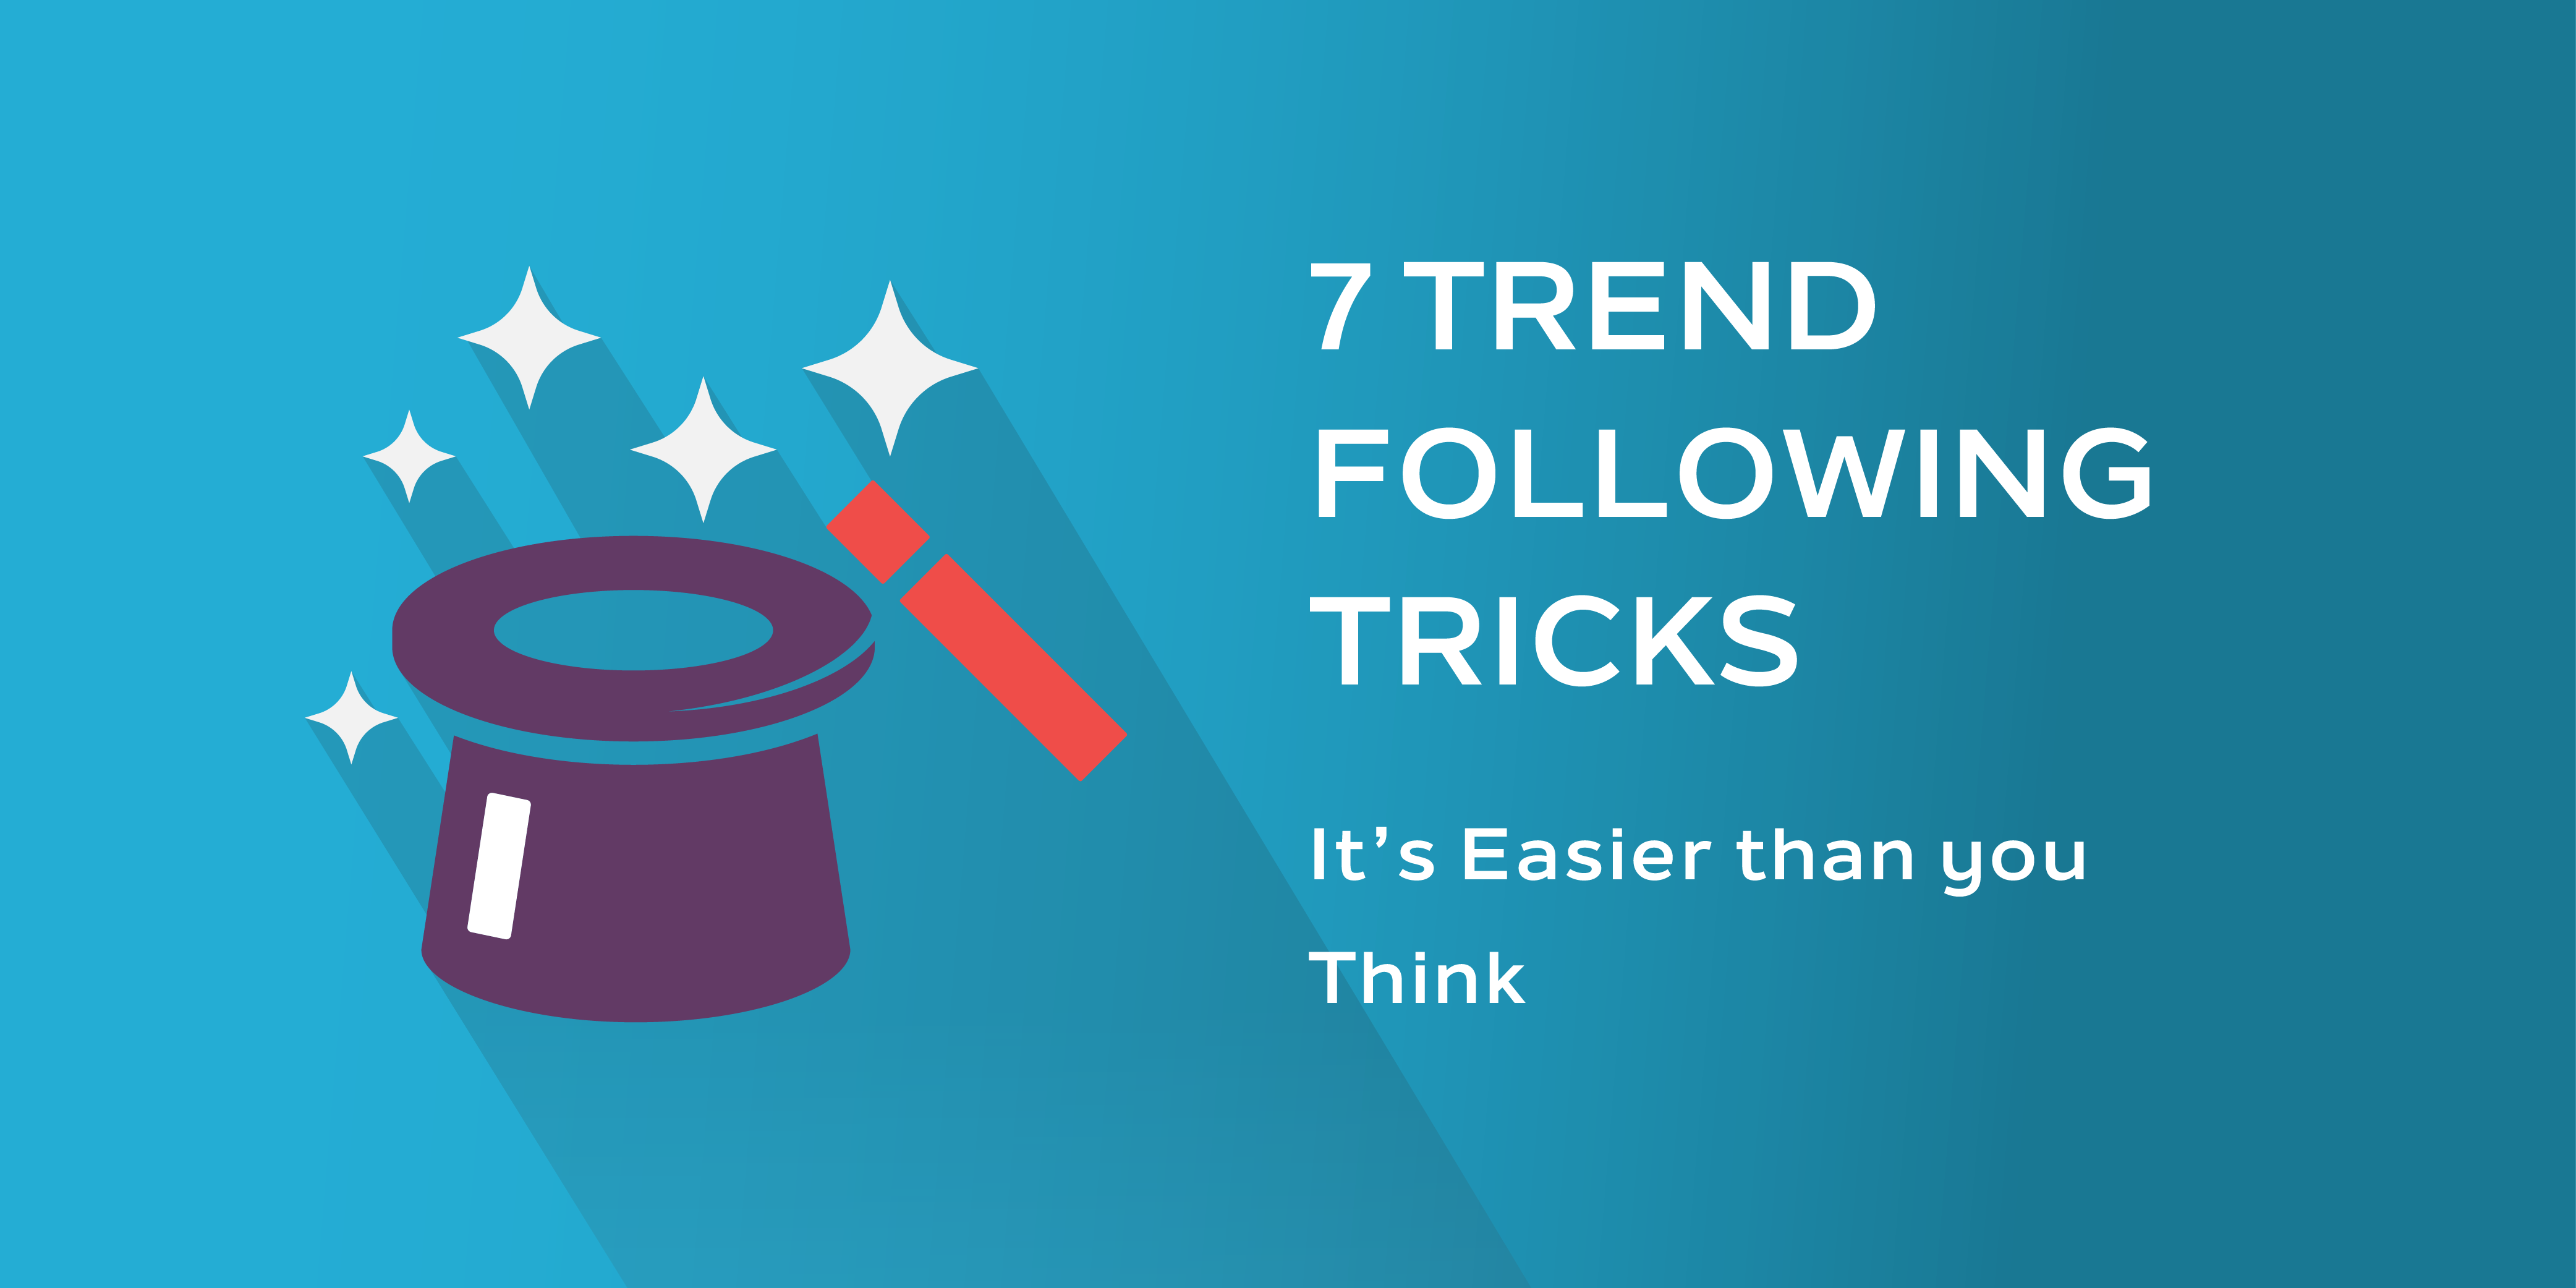 7 Trend Following Tricks